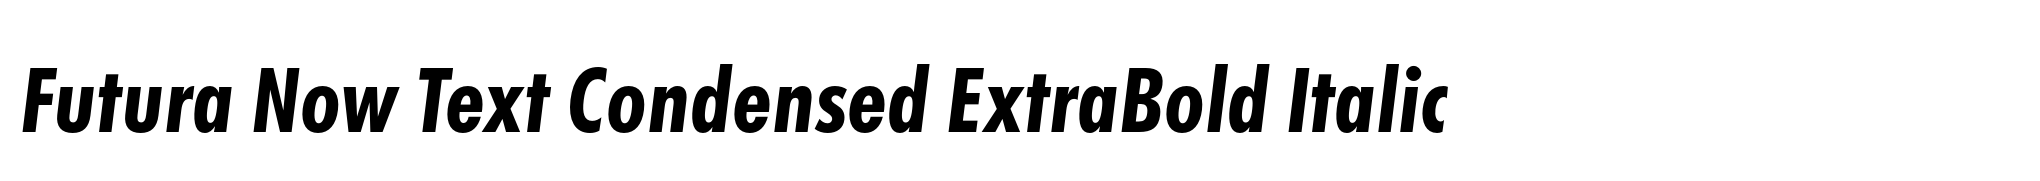 Futura Now Text Condensed ExtraBold Italic image